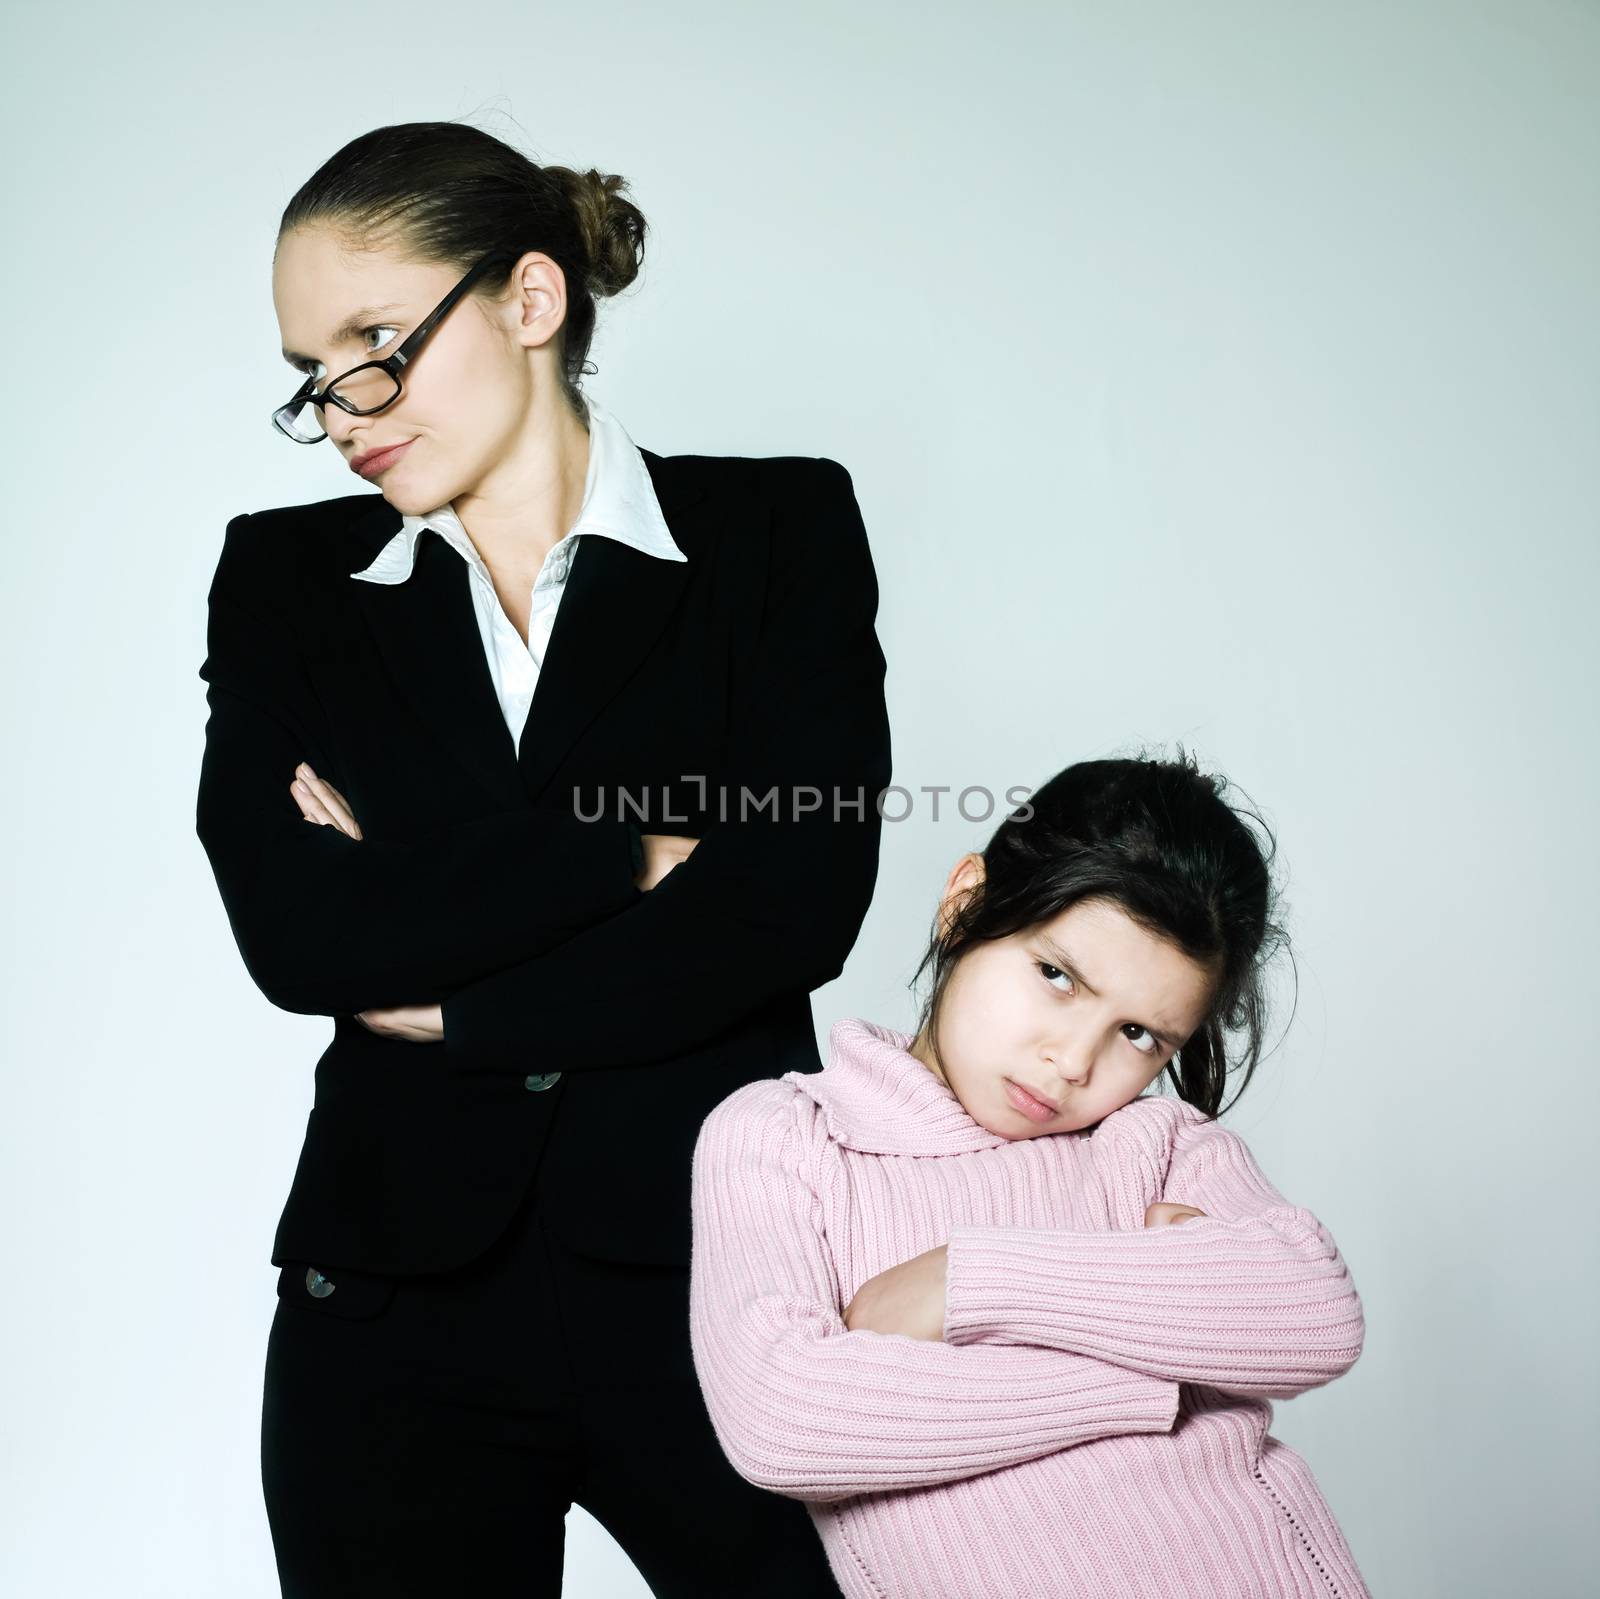 nanny teacher mother woman child conflict dipute problems education